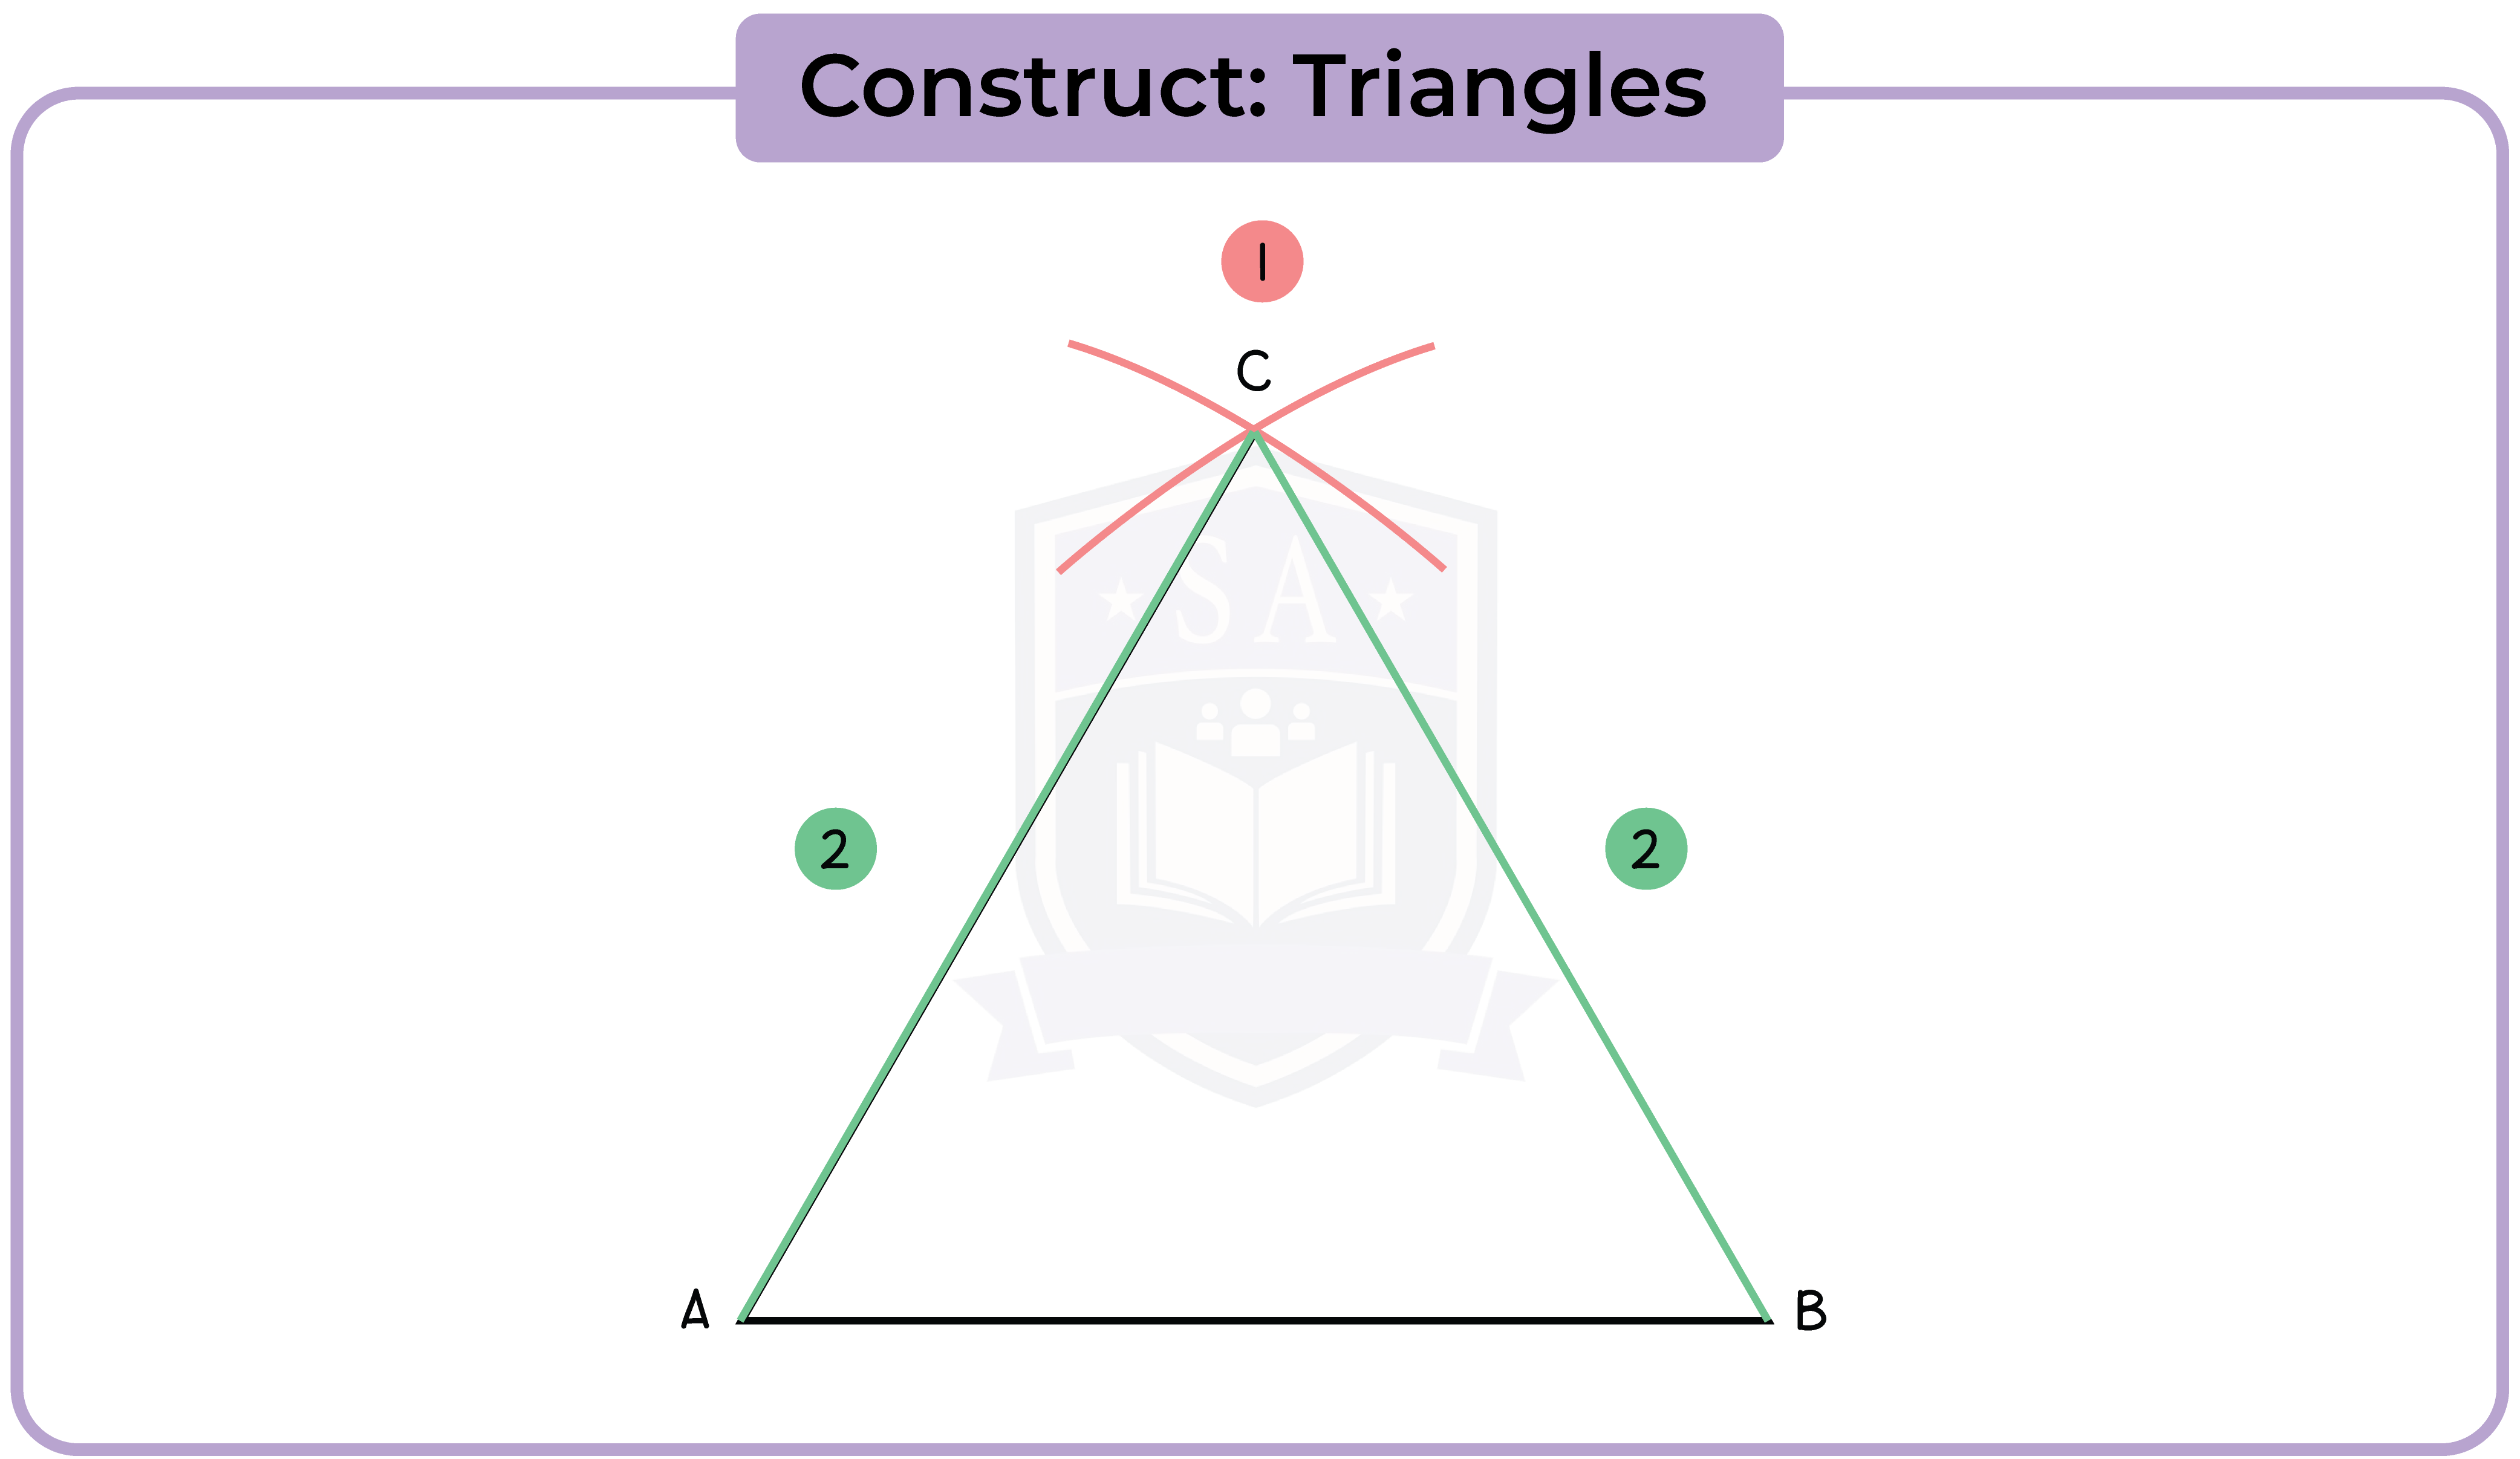 edexcel_igcse_mathematics a_topic 29_construction_001_Construct: Triangles